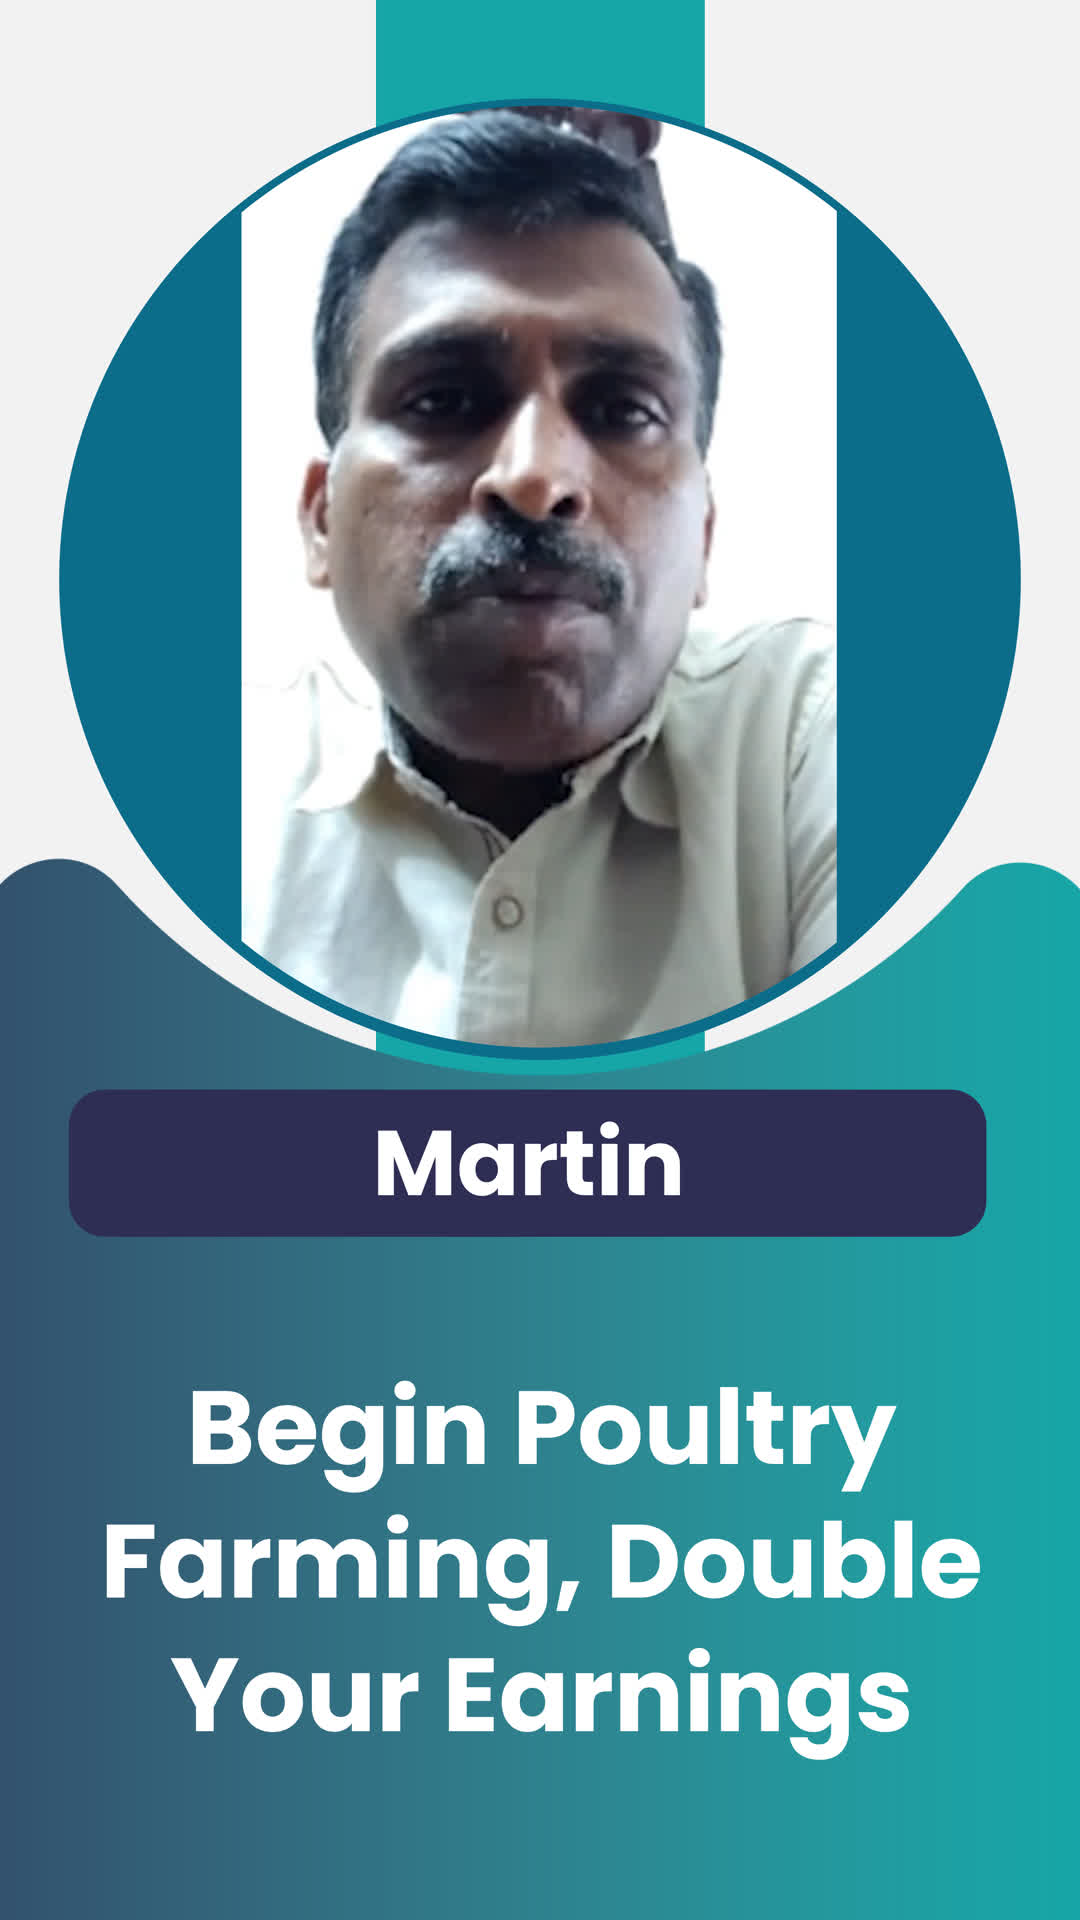 Martin's Honest Review of ffreedom app - Ariyalur ,Tamil Nadu